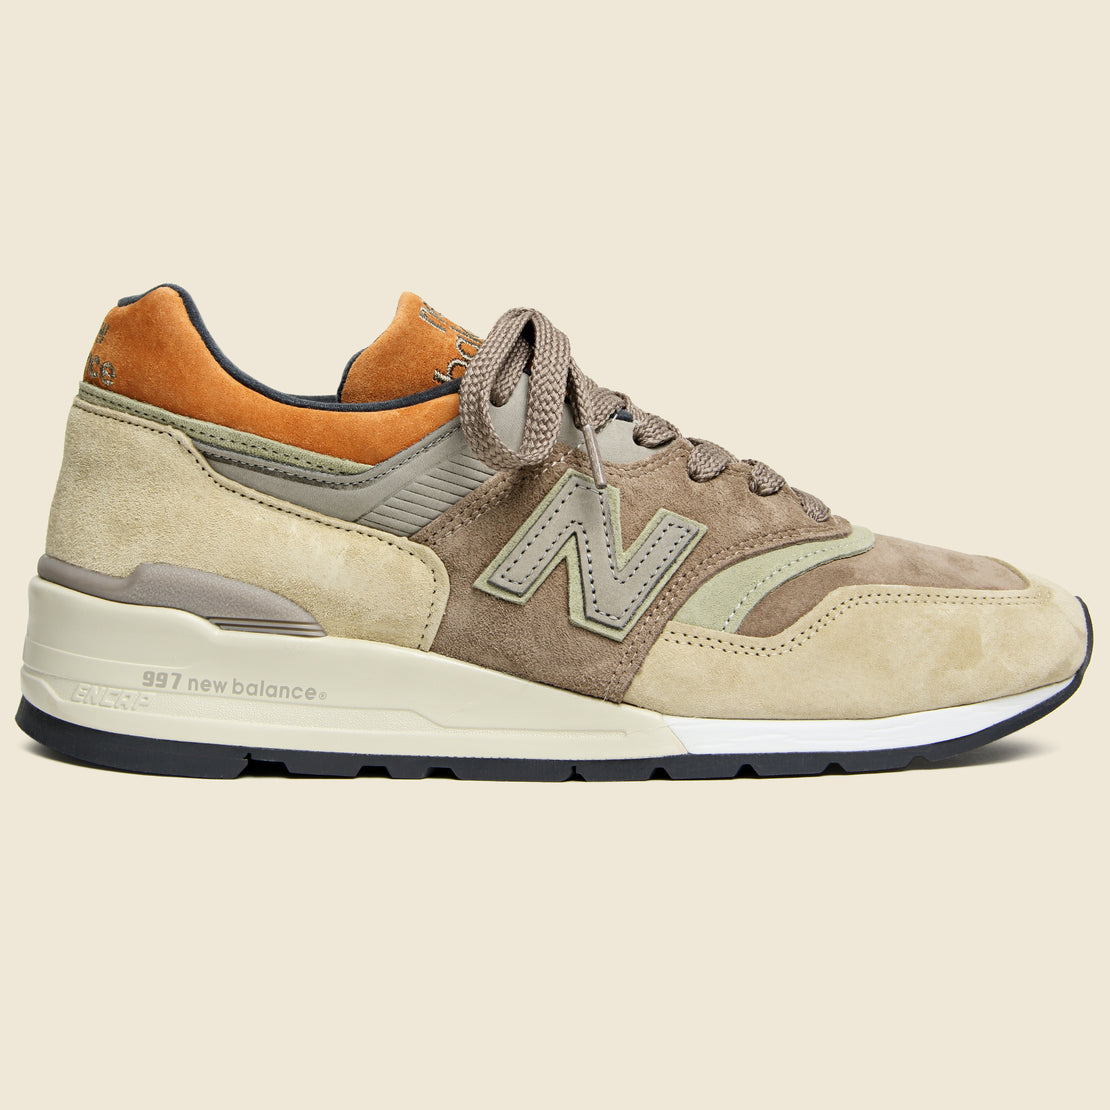 New Balance 997 Sneaker - Tan/Brown